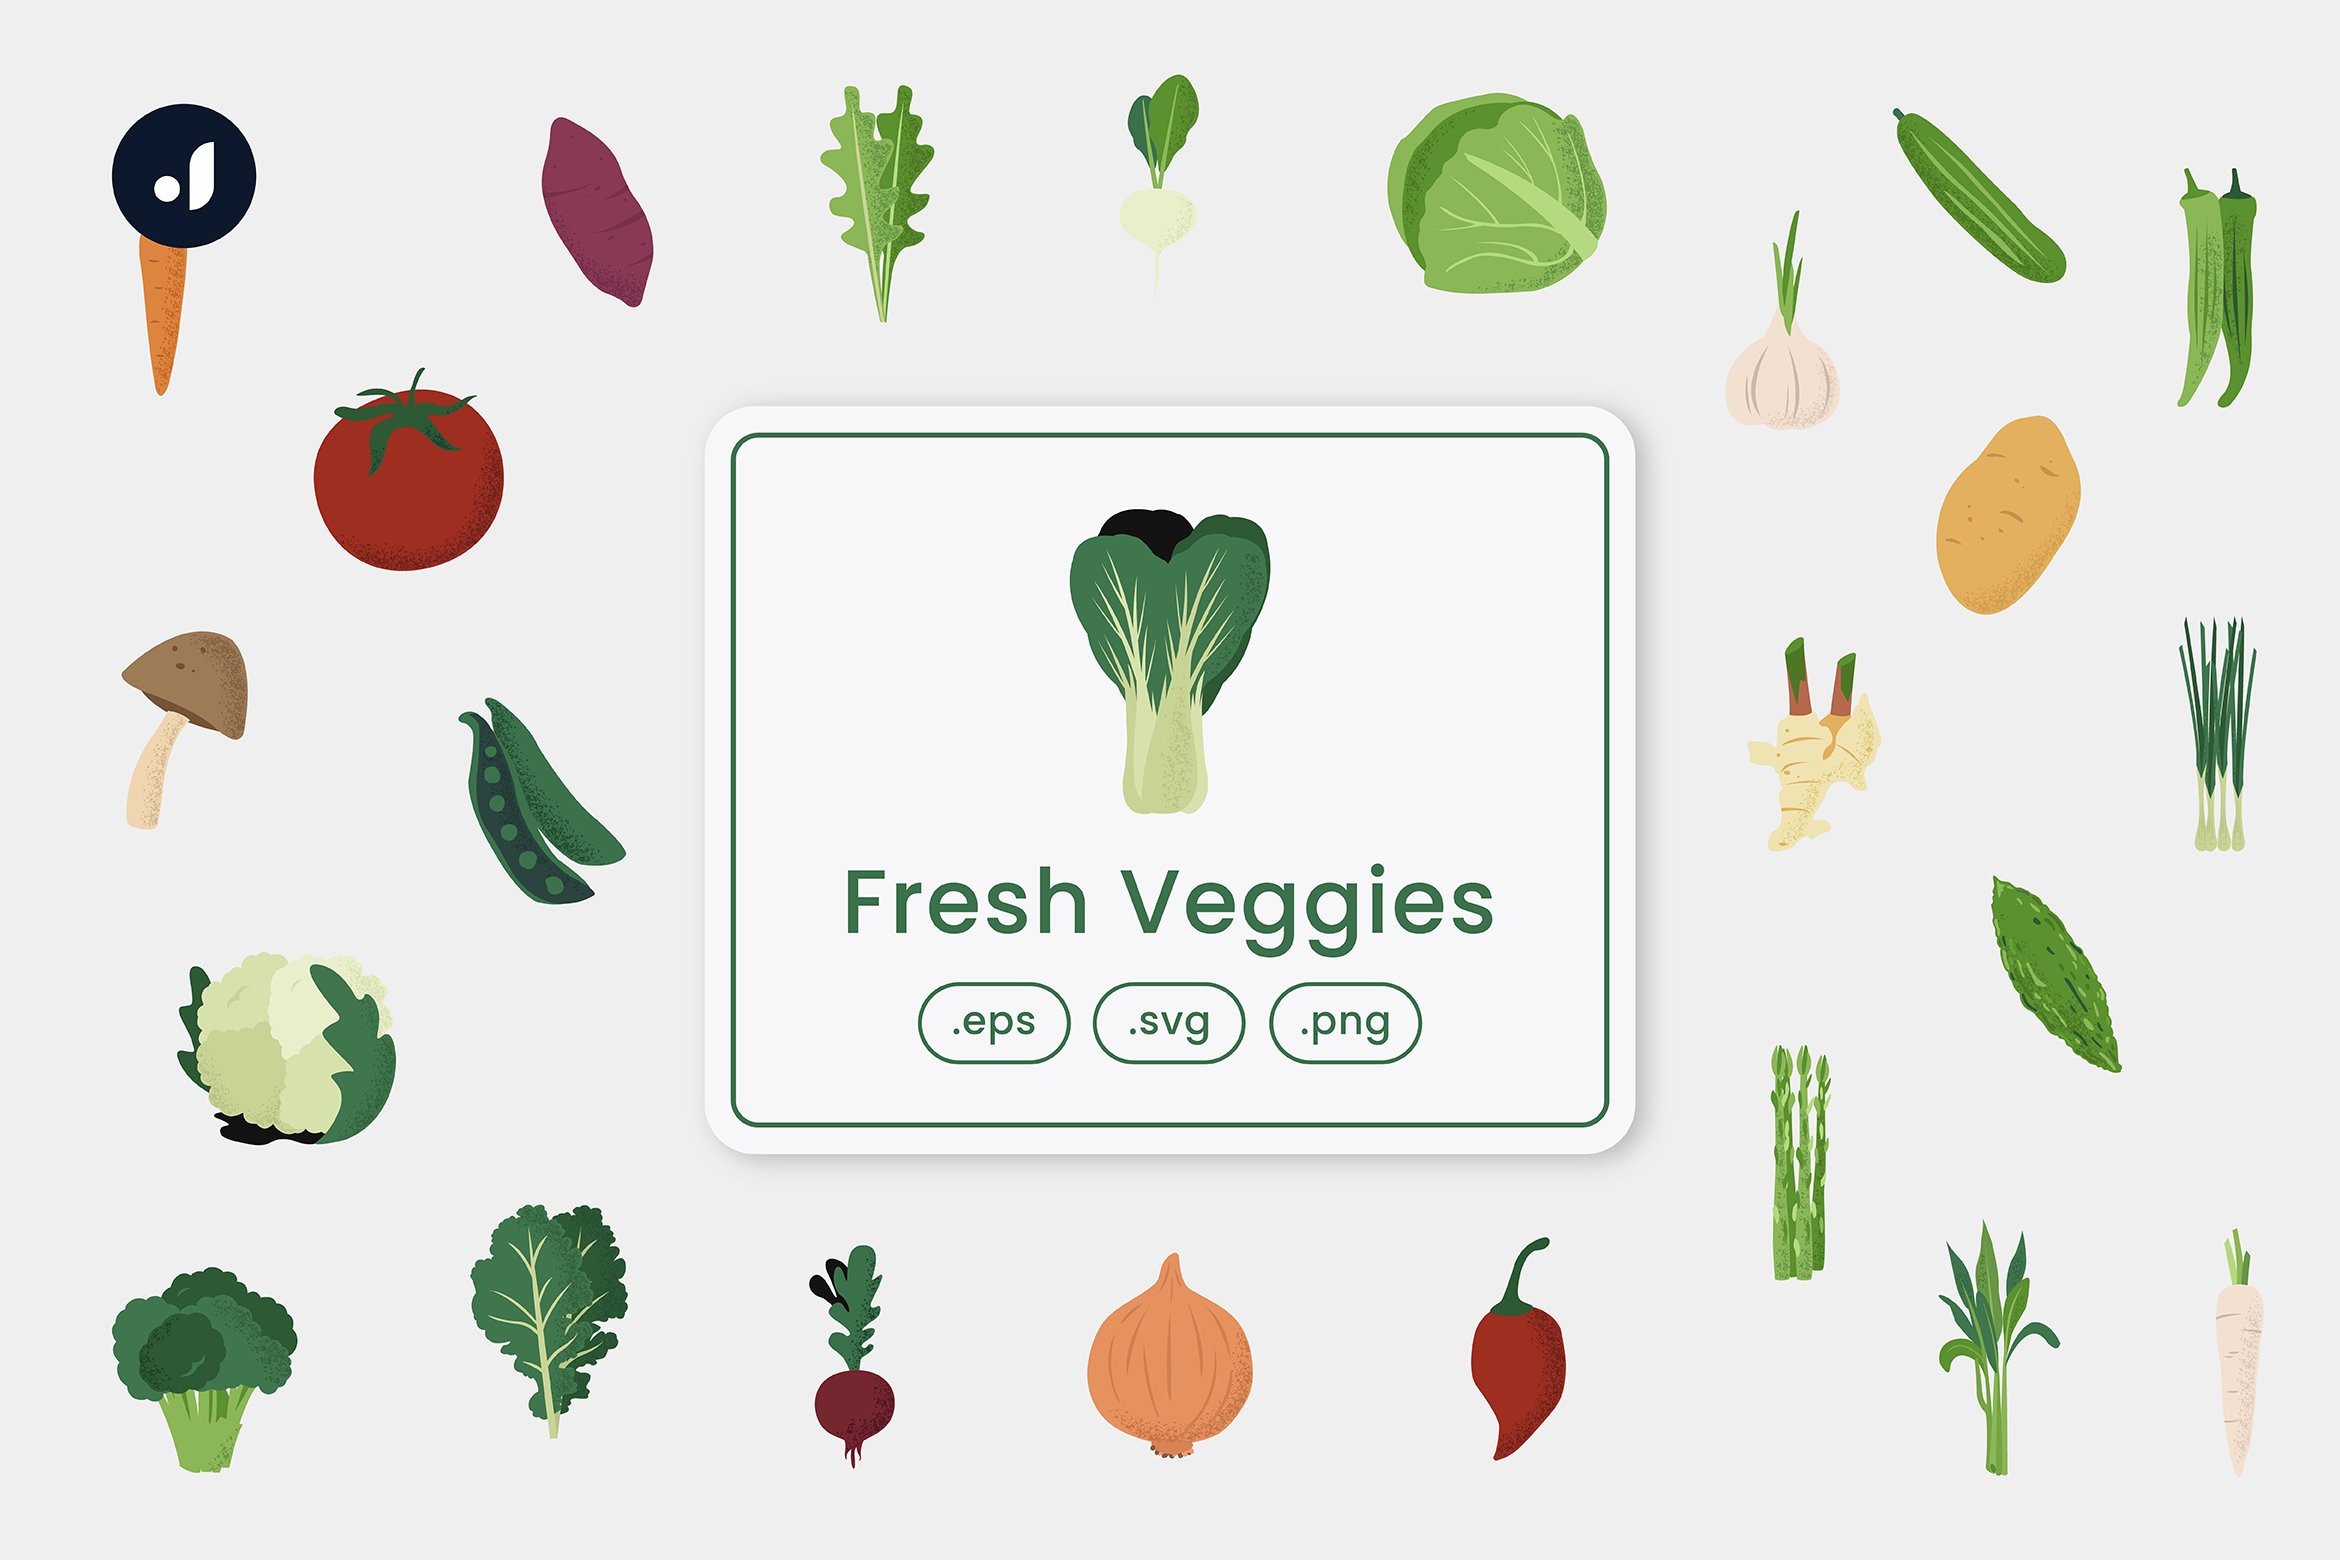 Fresh Veggies Illustration cover image.